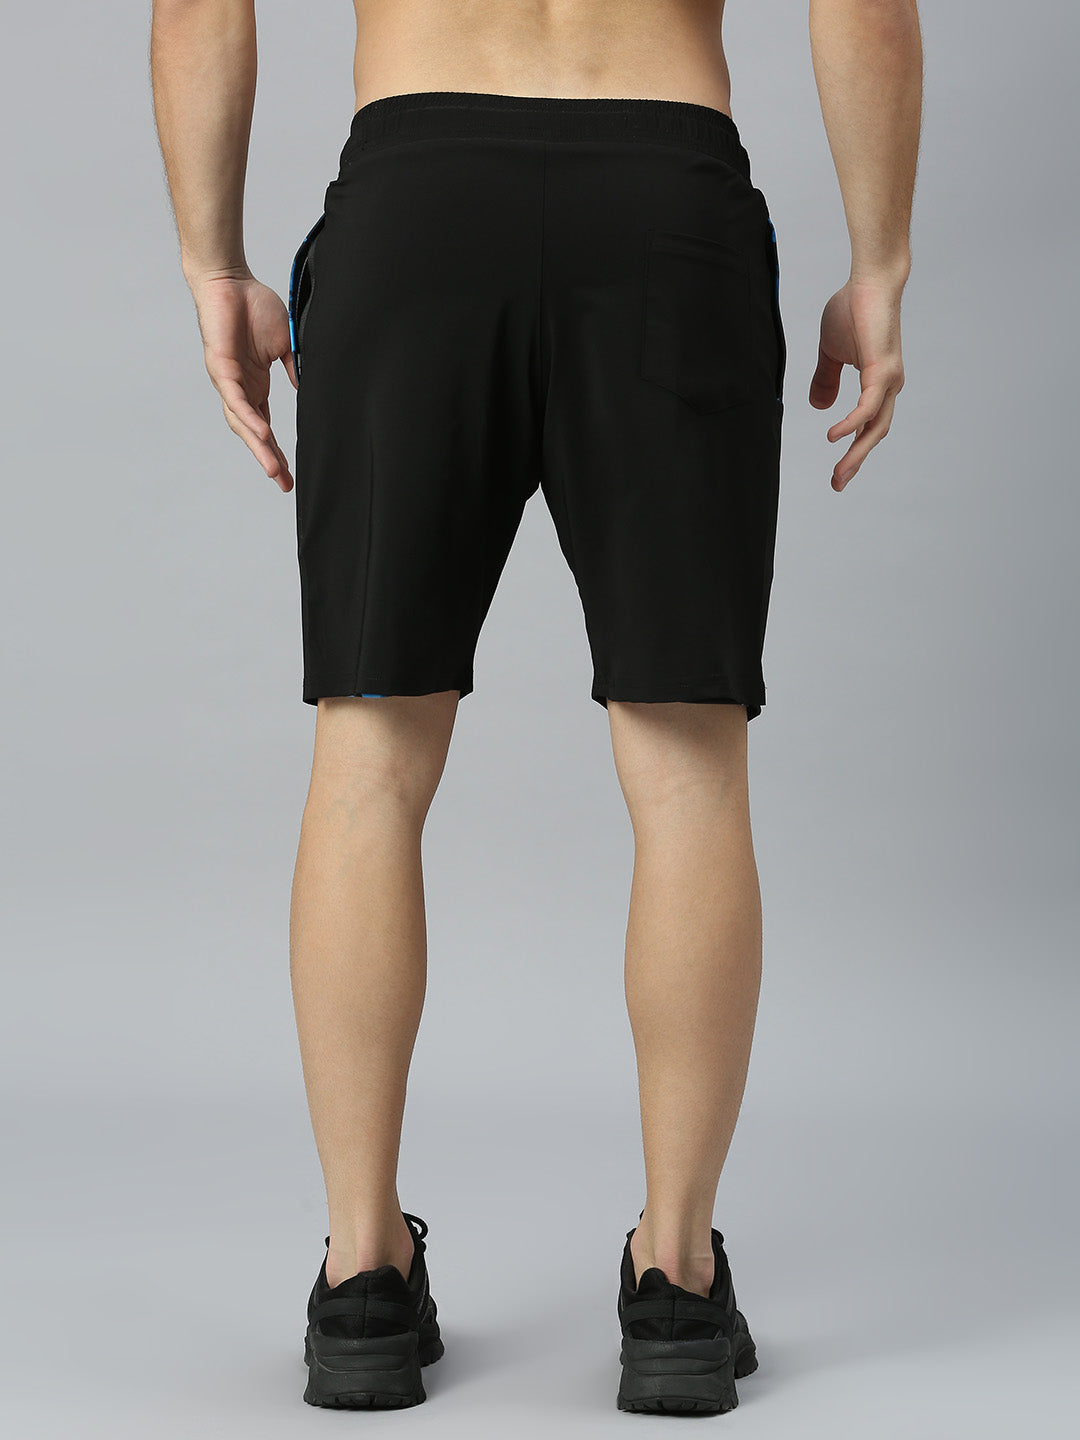 Shop Blue Workout Gym Compression Shorts For Mens Physique – AestheticNation